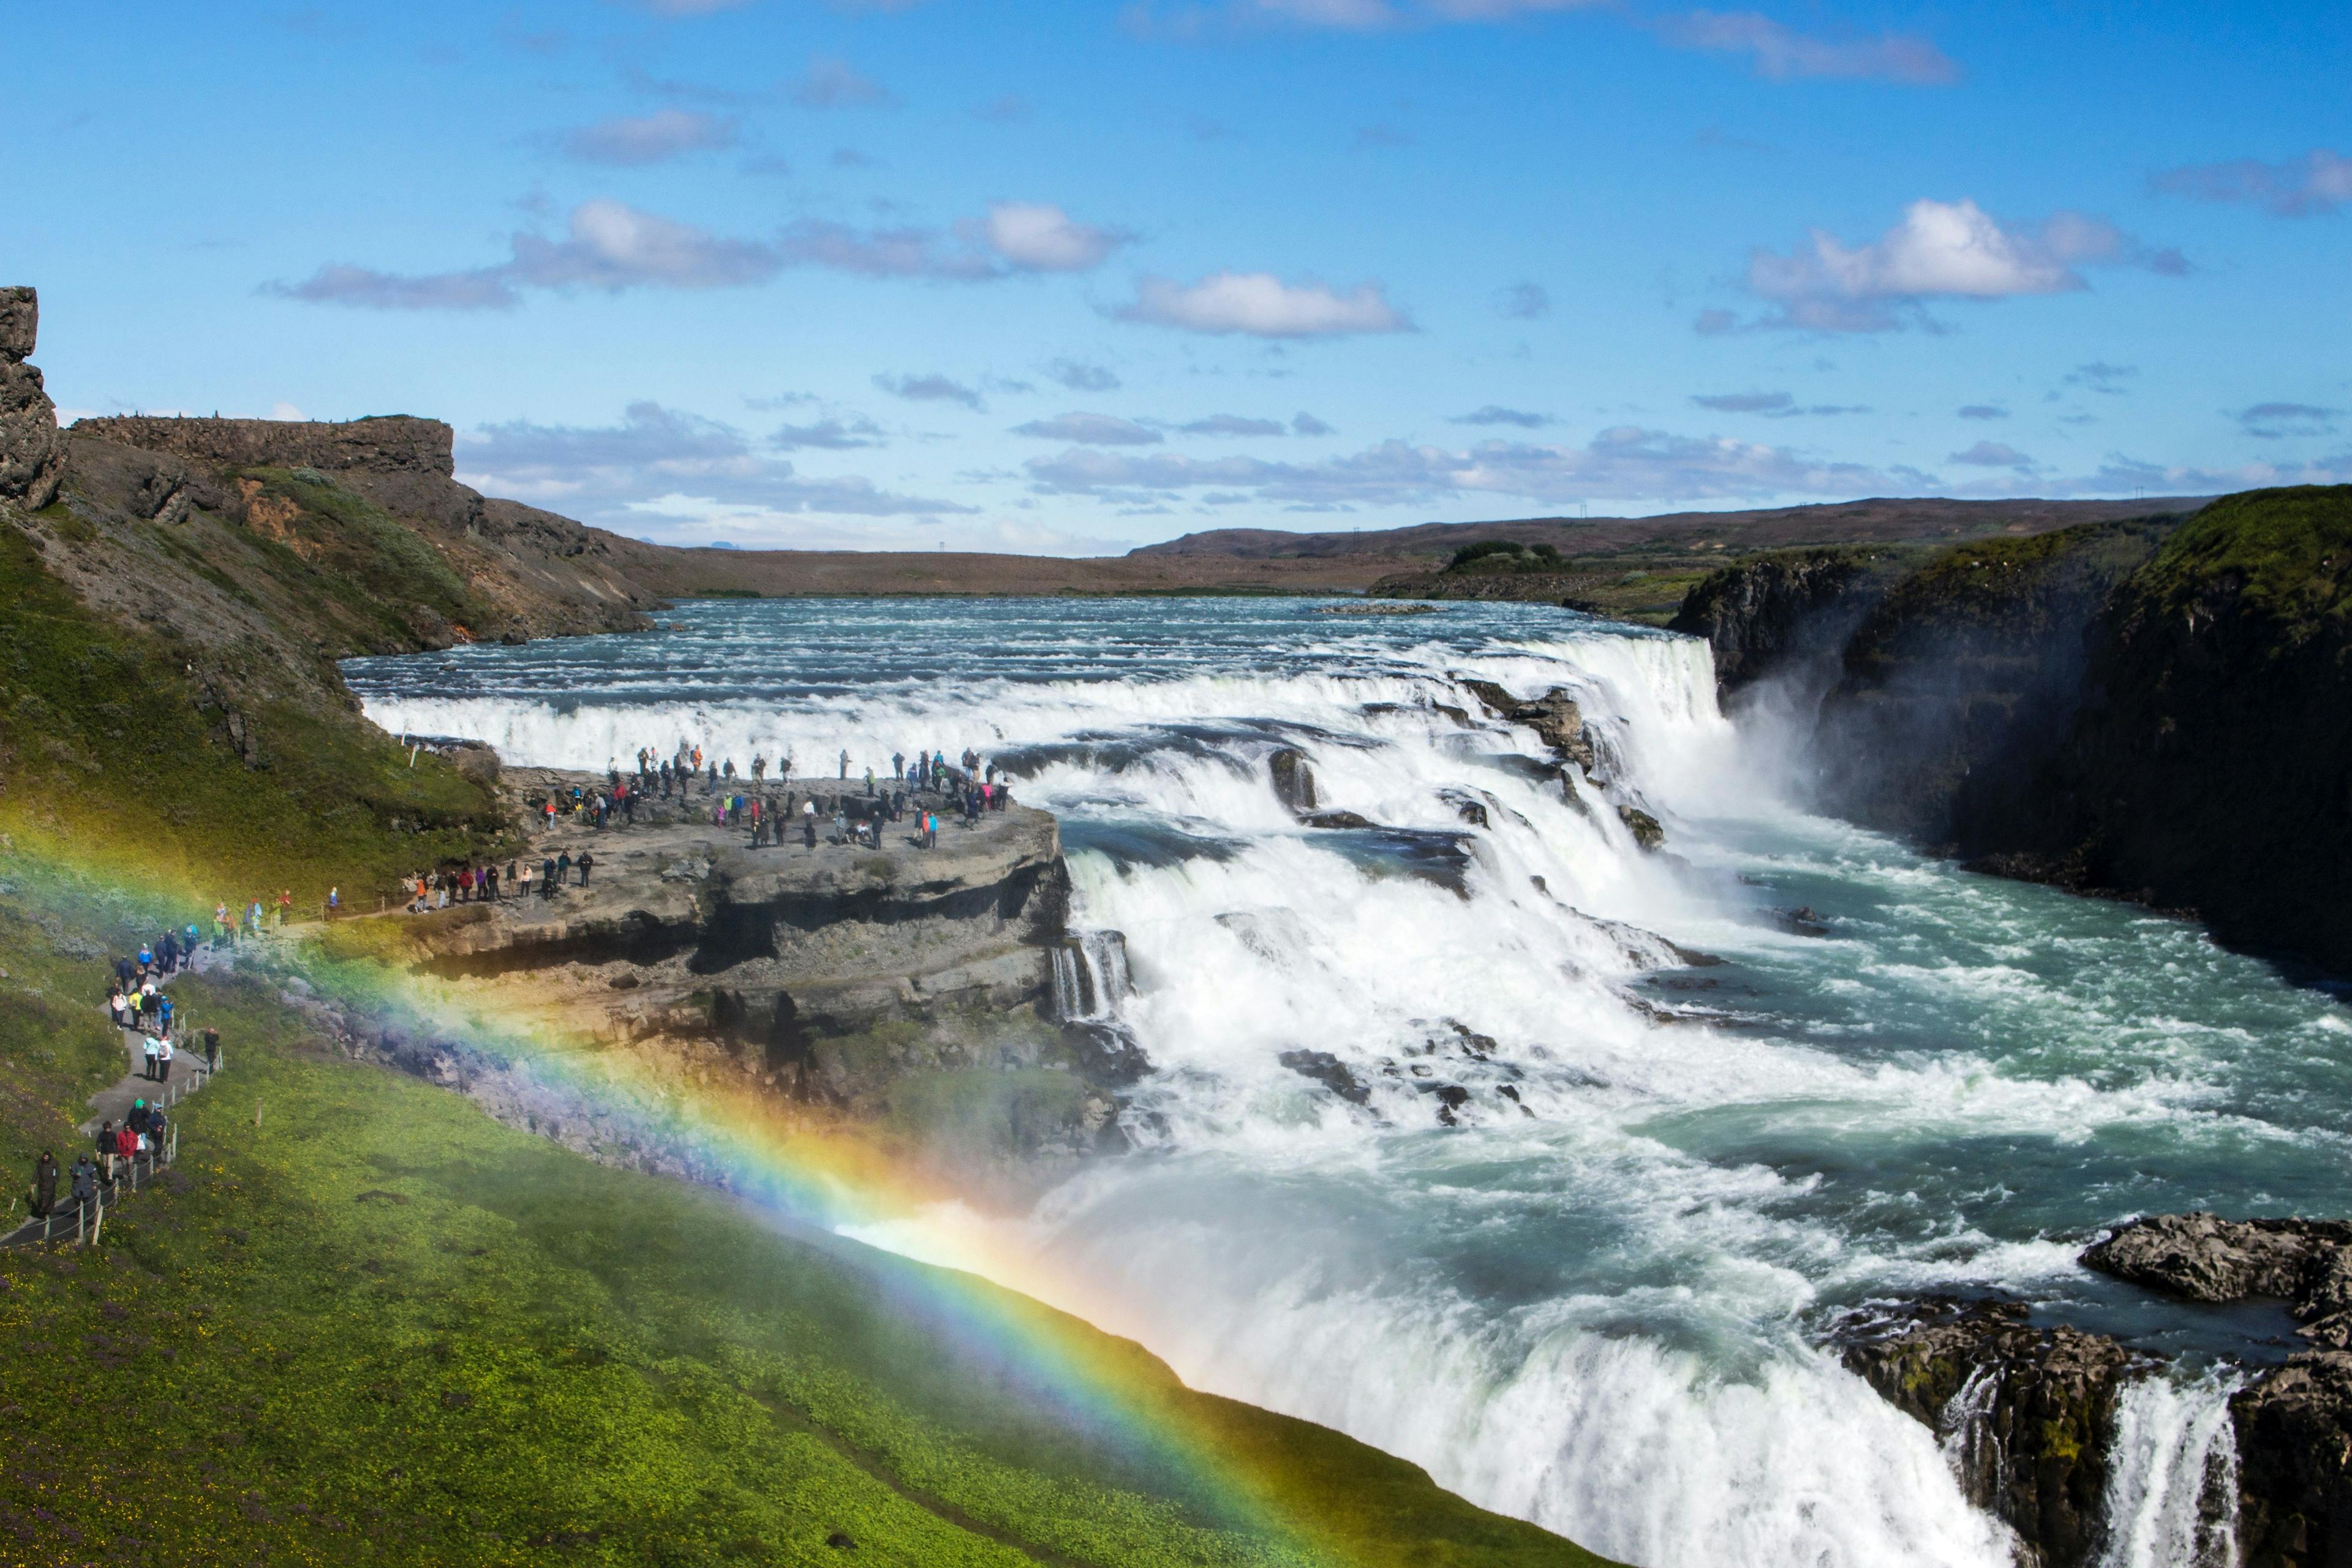 People observing Gullfoss waterfall in Iceland.